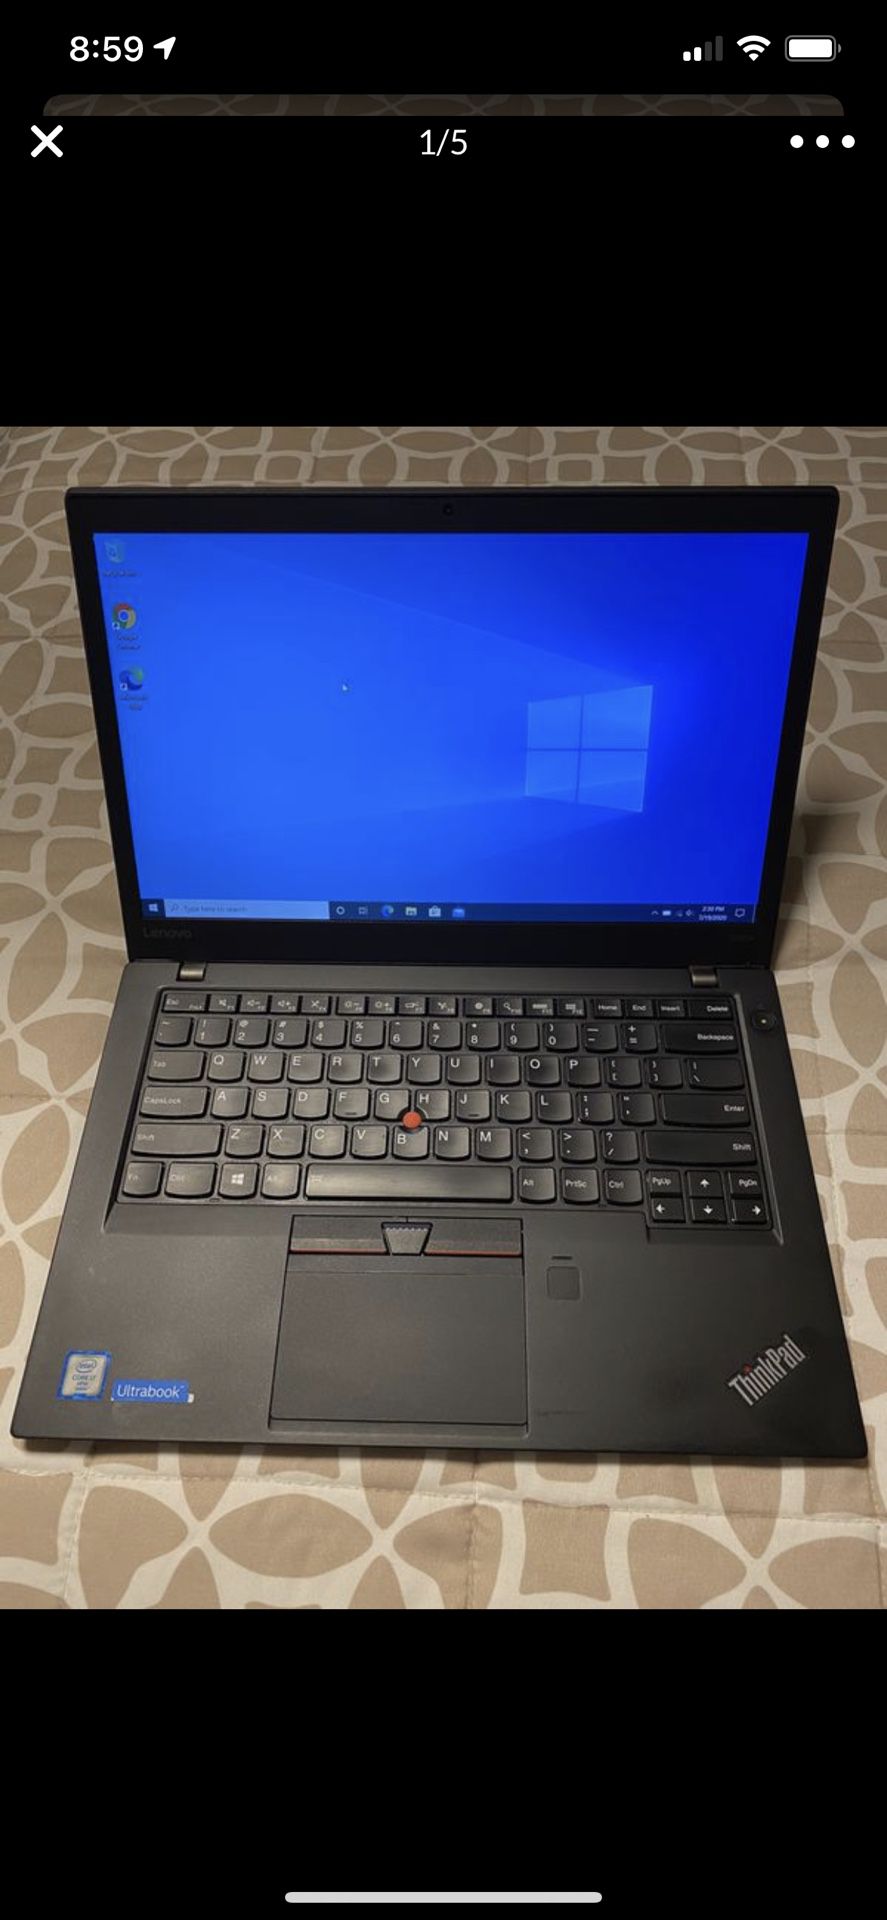 Lenovo T460s Ultrabook Thinkpad Laptop Notebook